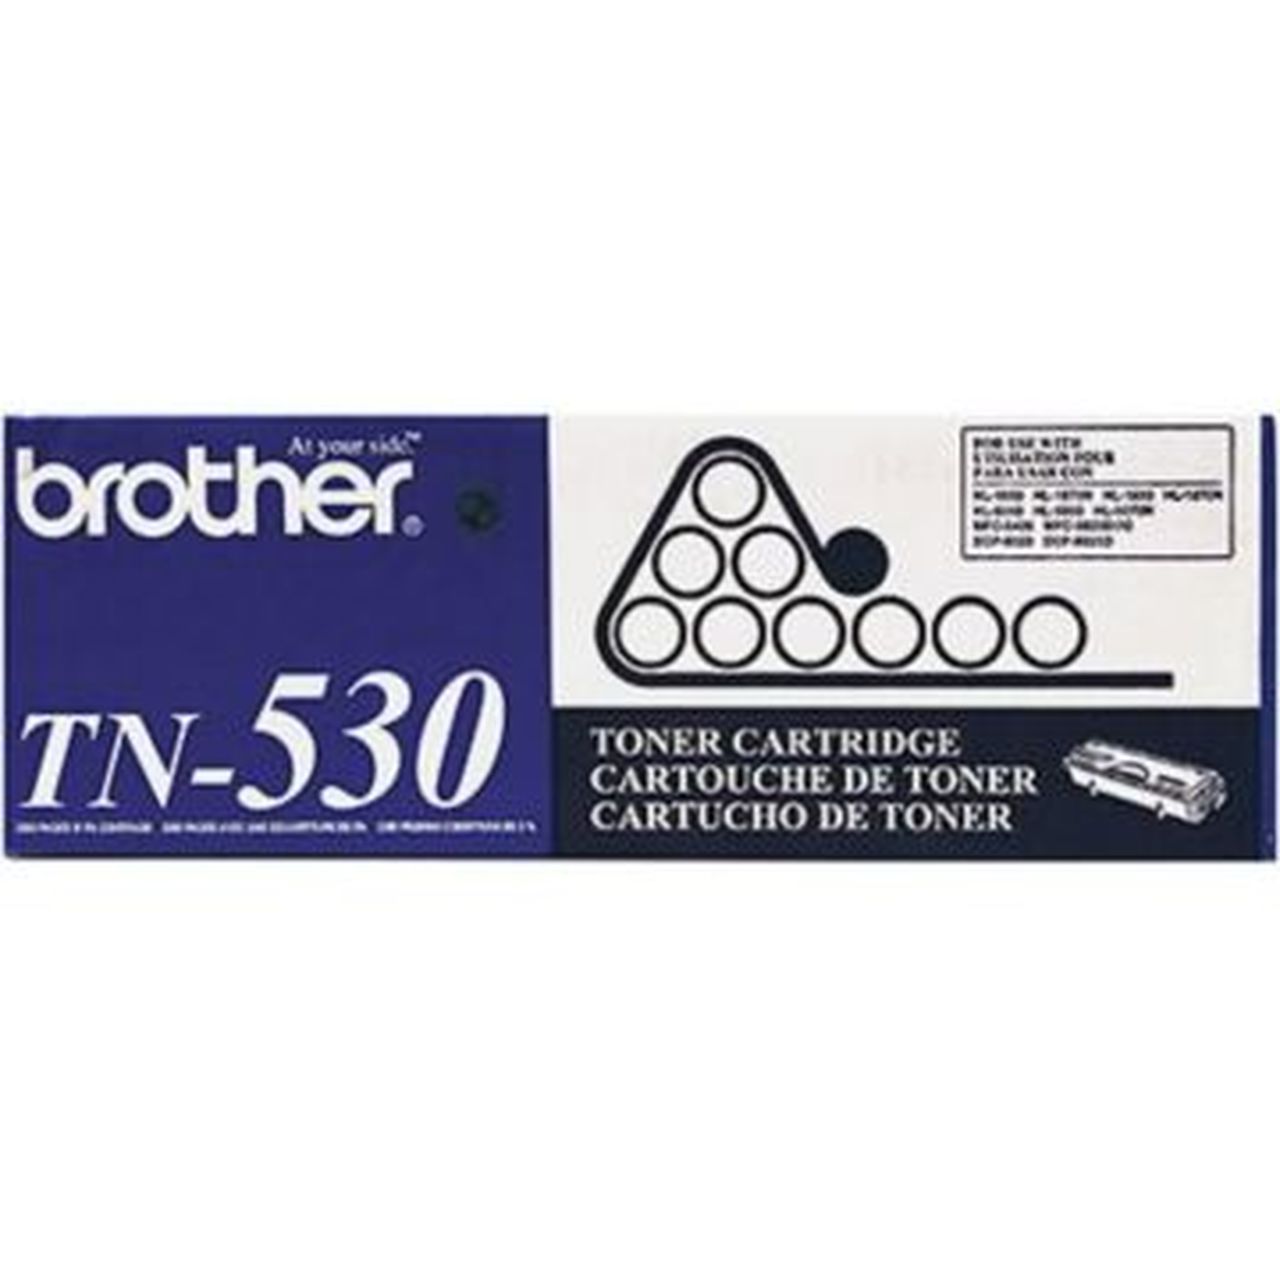 Discount Brother HL-5040 Toner Cartridges | Brother Toner Cartridges